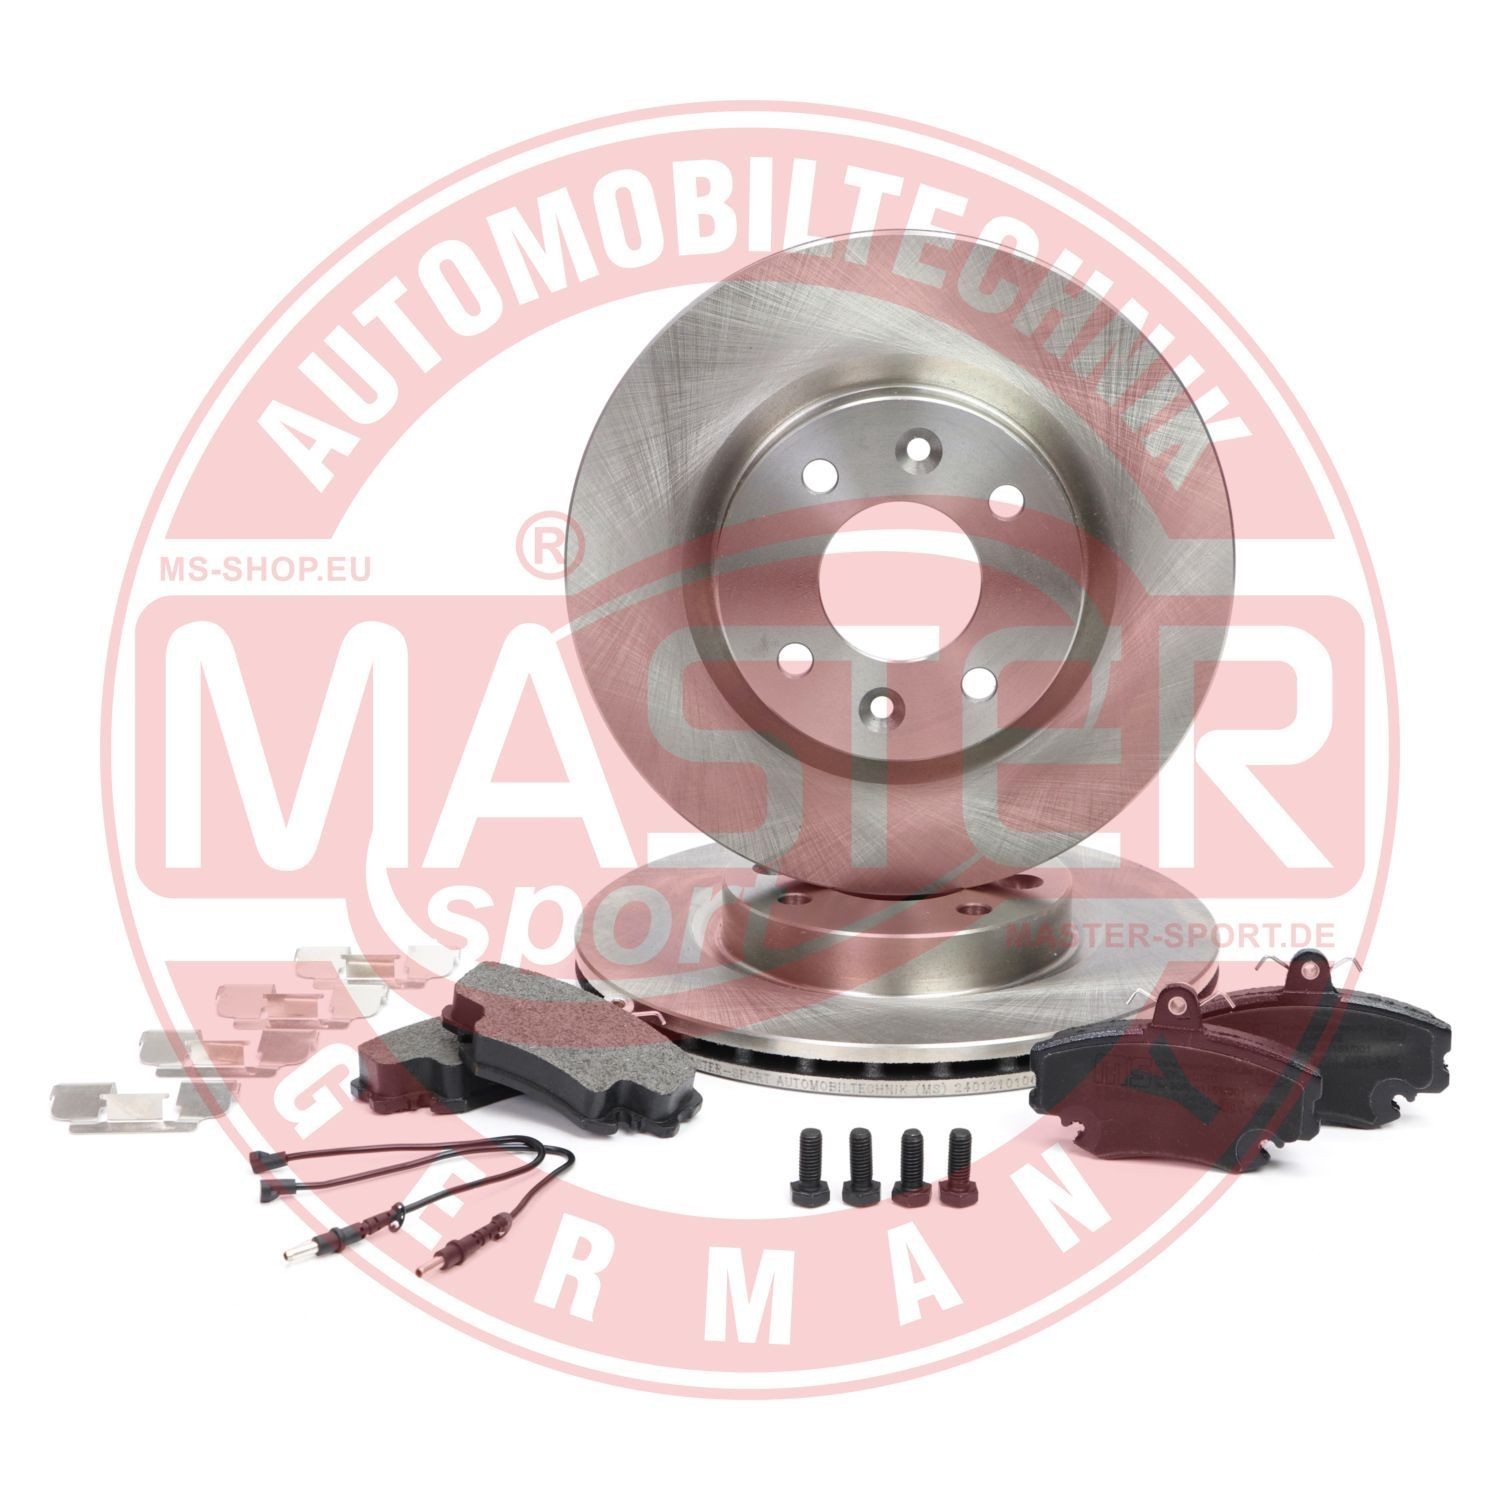 MASTER-SPORT 202101060 Brake discs and pads Twingo c06 1.2 LPG 60 hp Petrol/Liquified Petroleum Gas (LPG) 2006 price